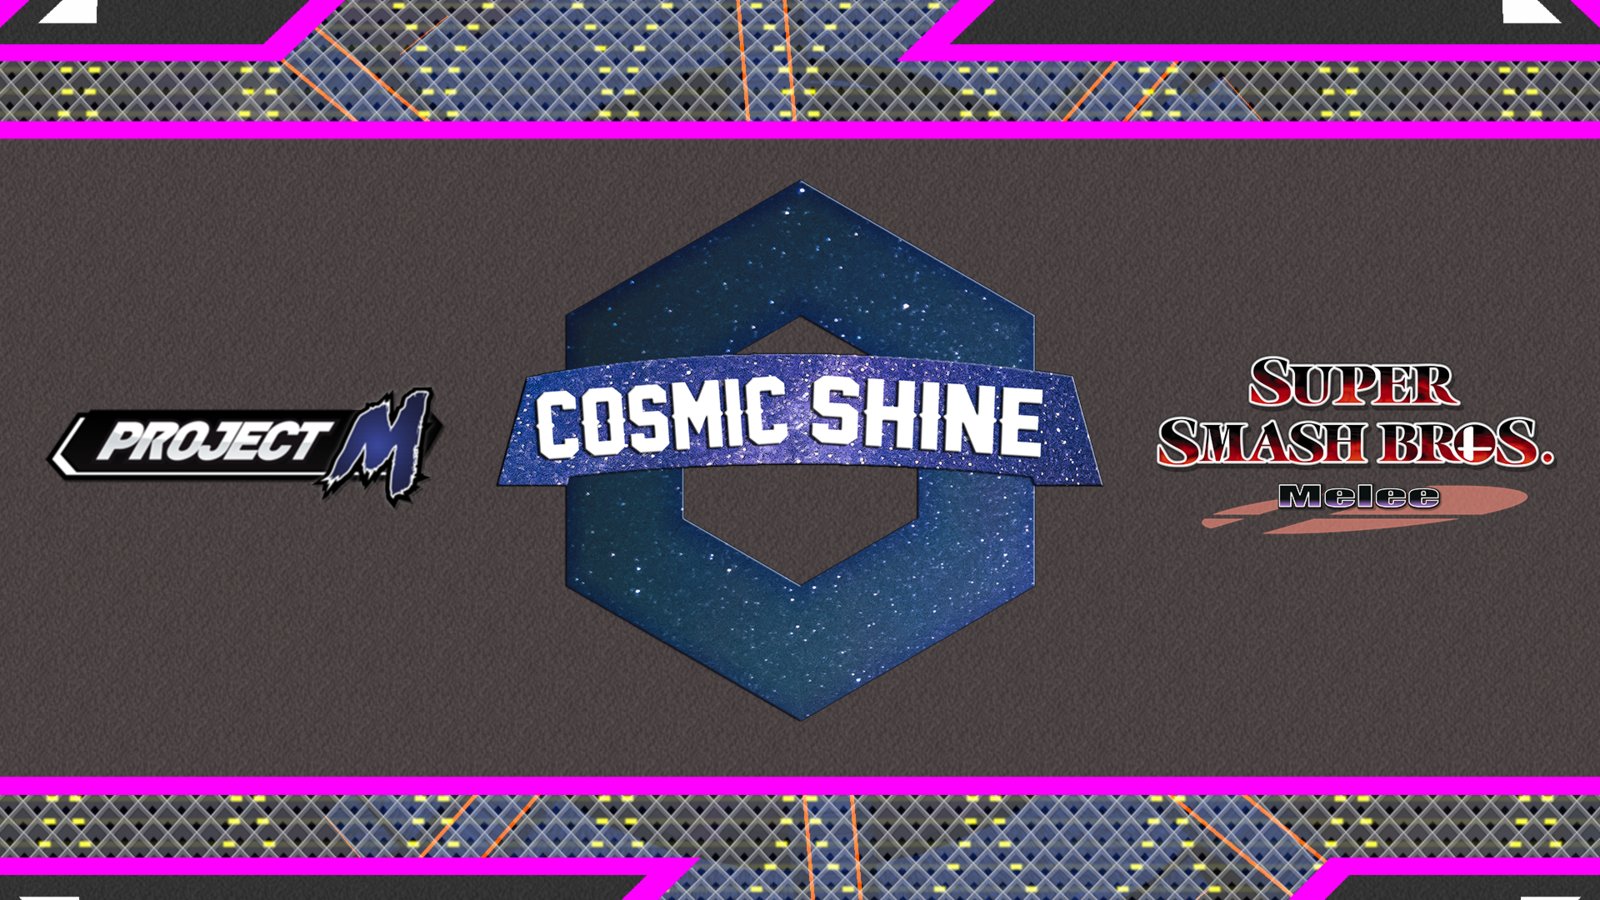 Cosmic Shine 2018 - Melee Singles